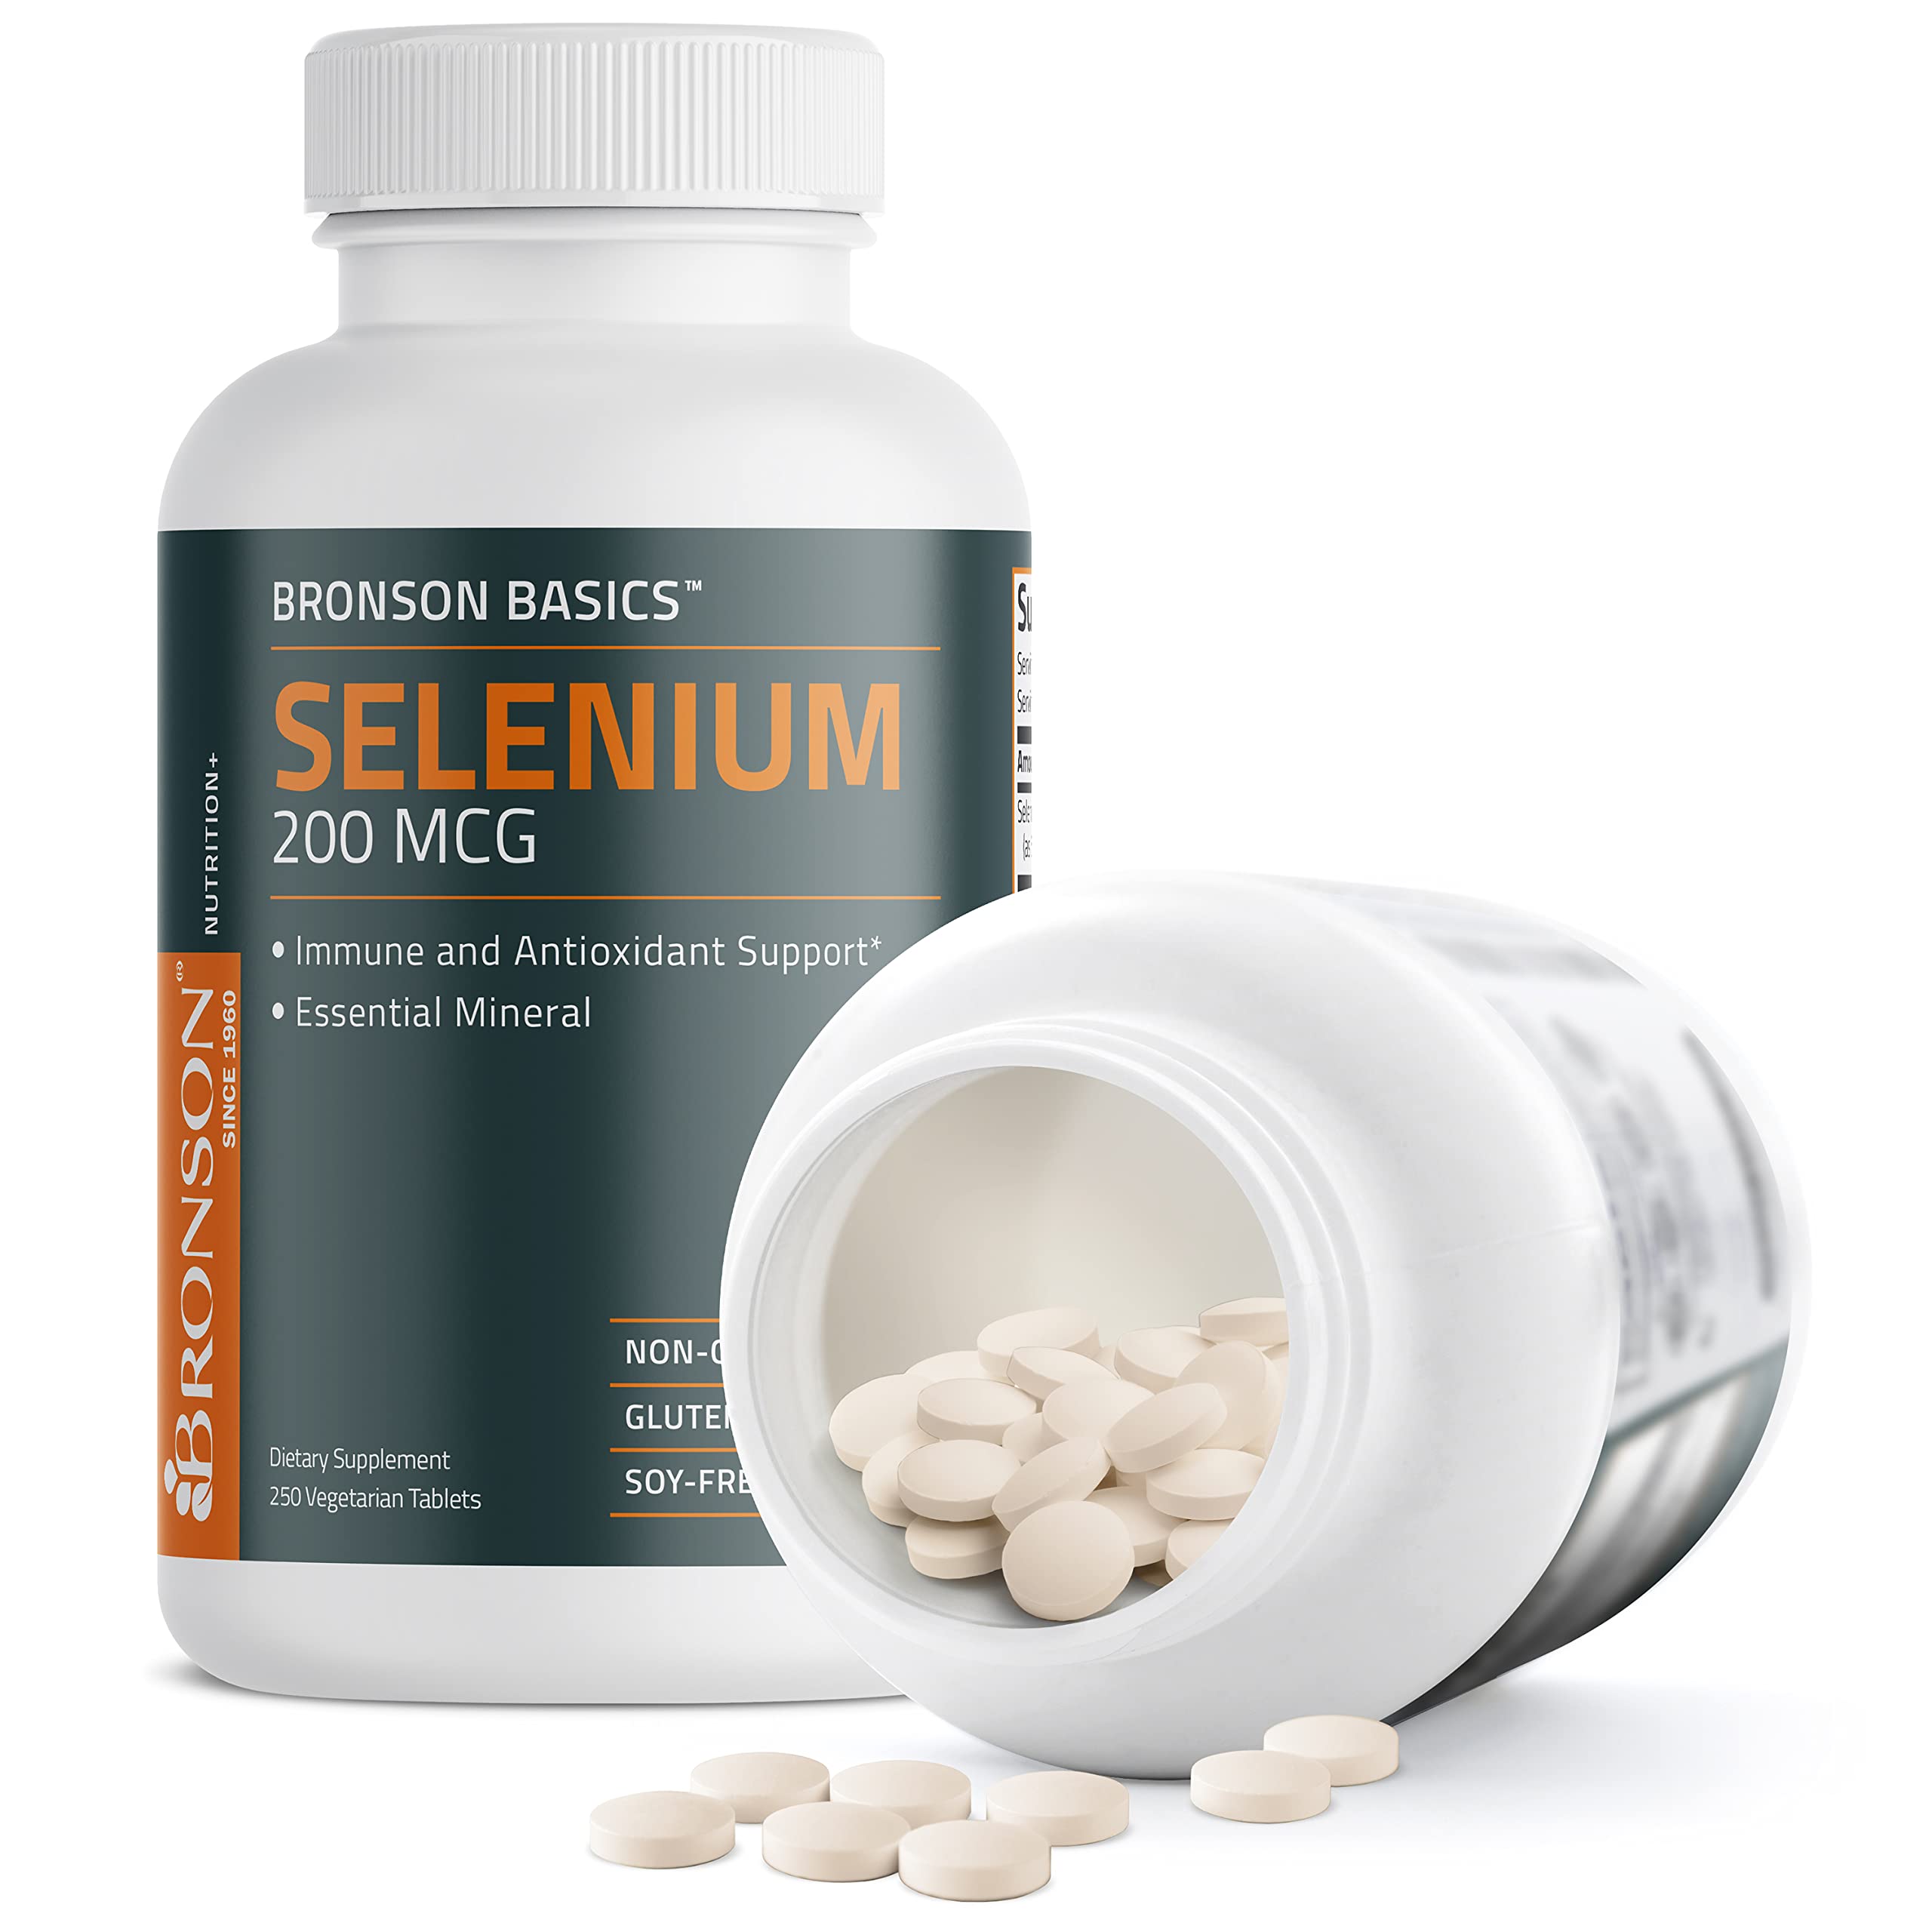 Selenium 200 mcg, 250 Vegetarian Tablets view 4 of 6